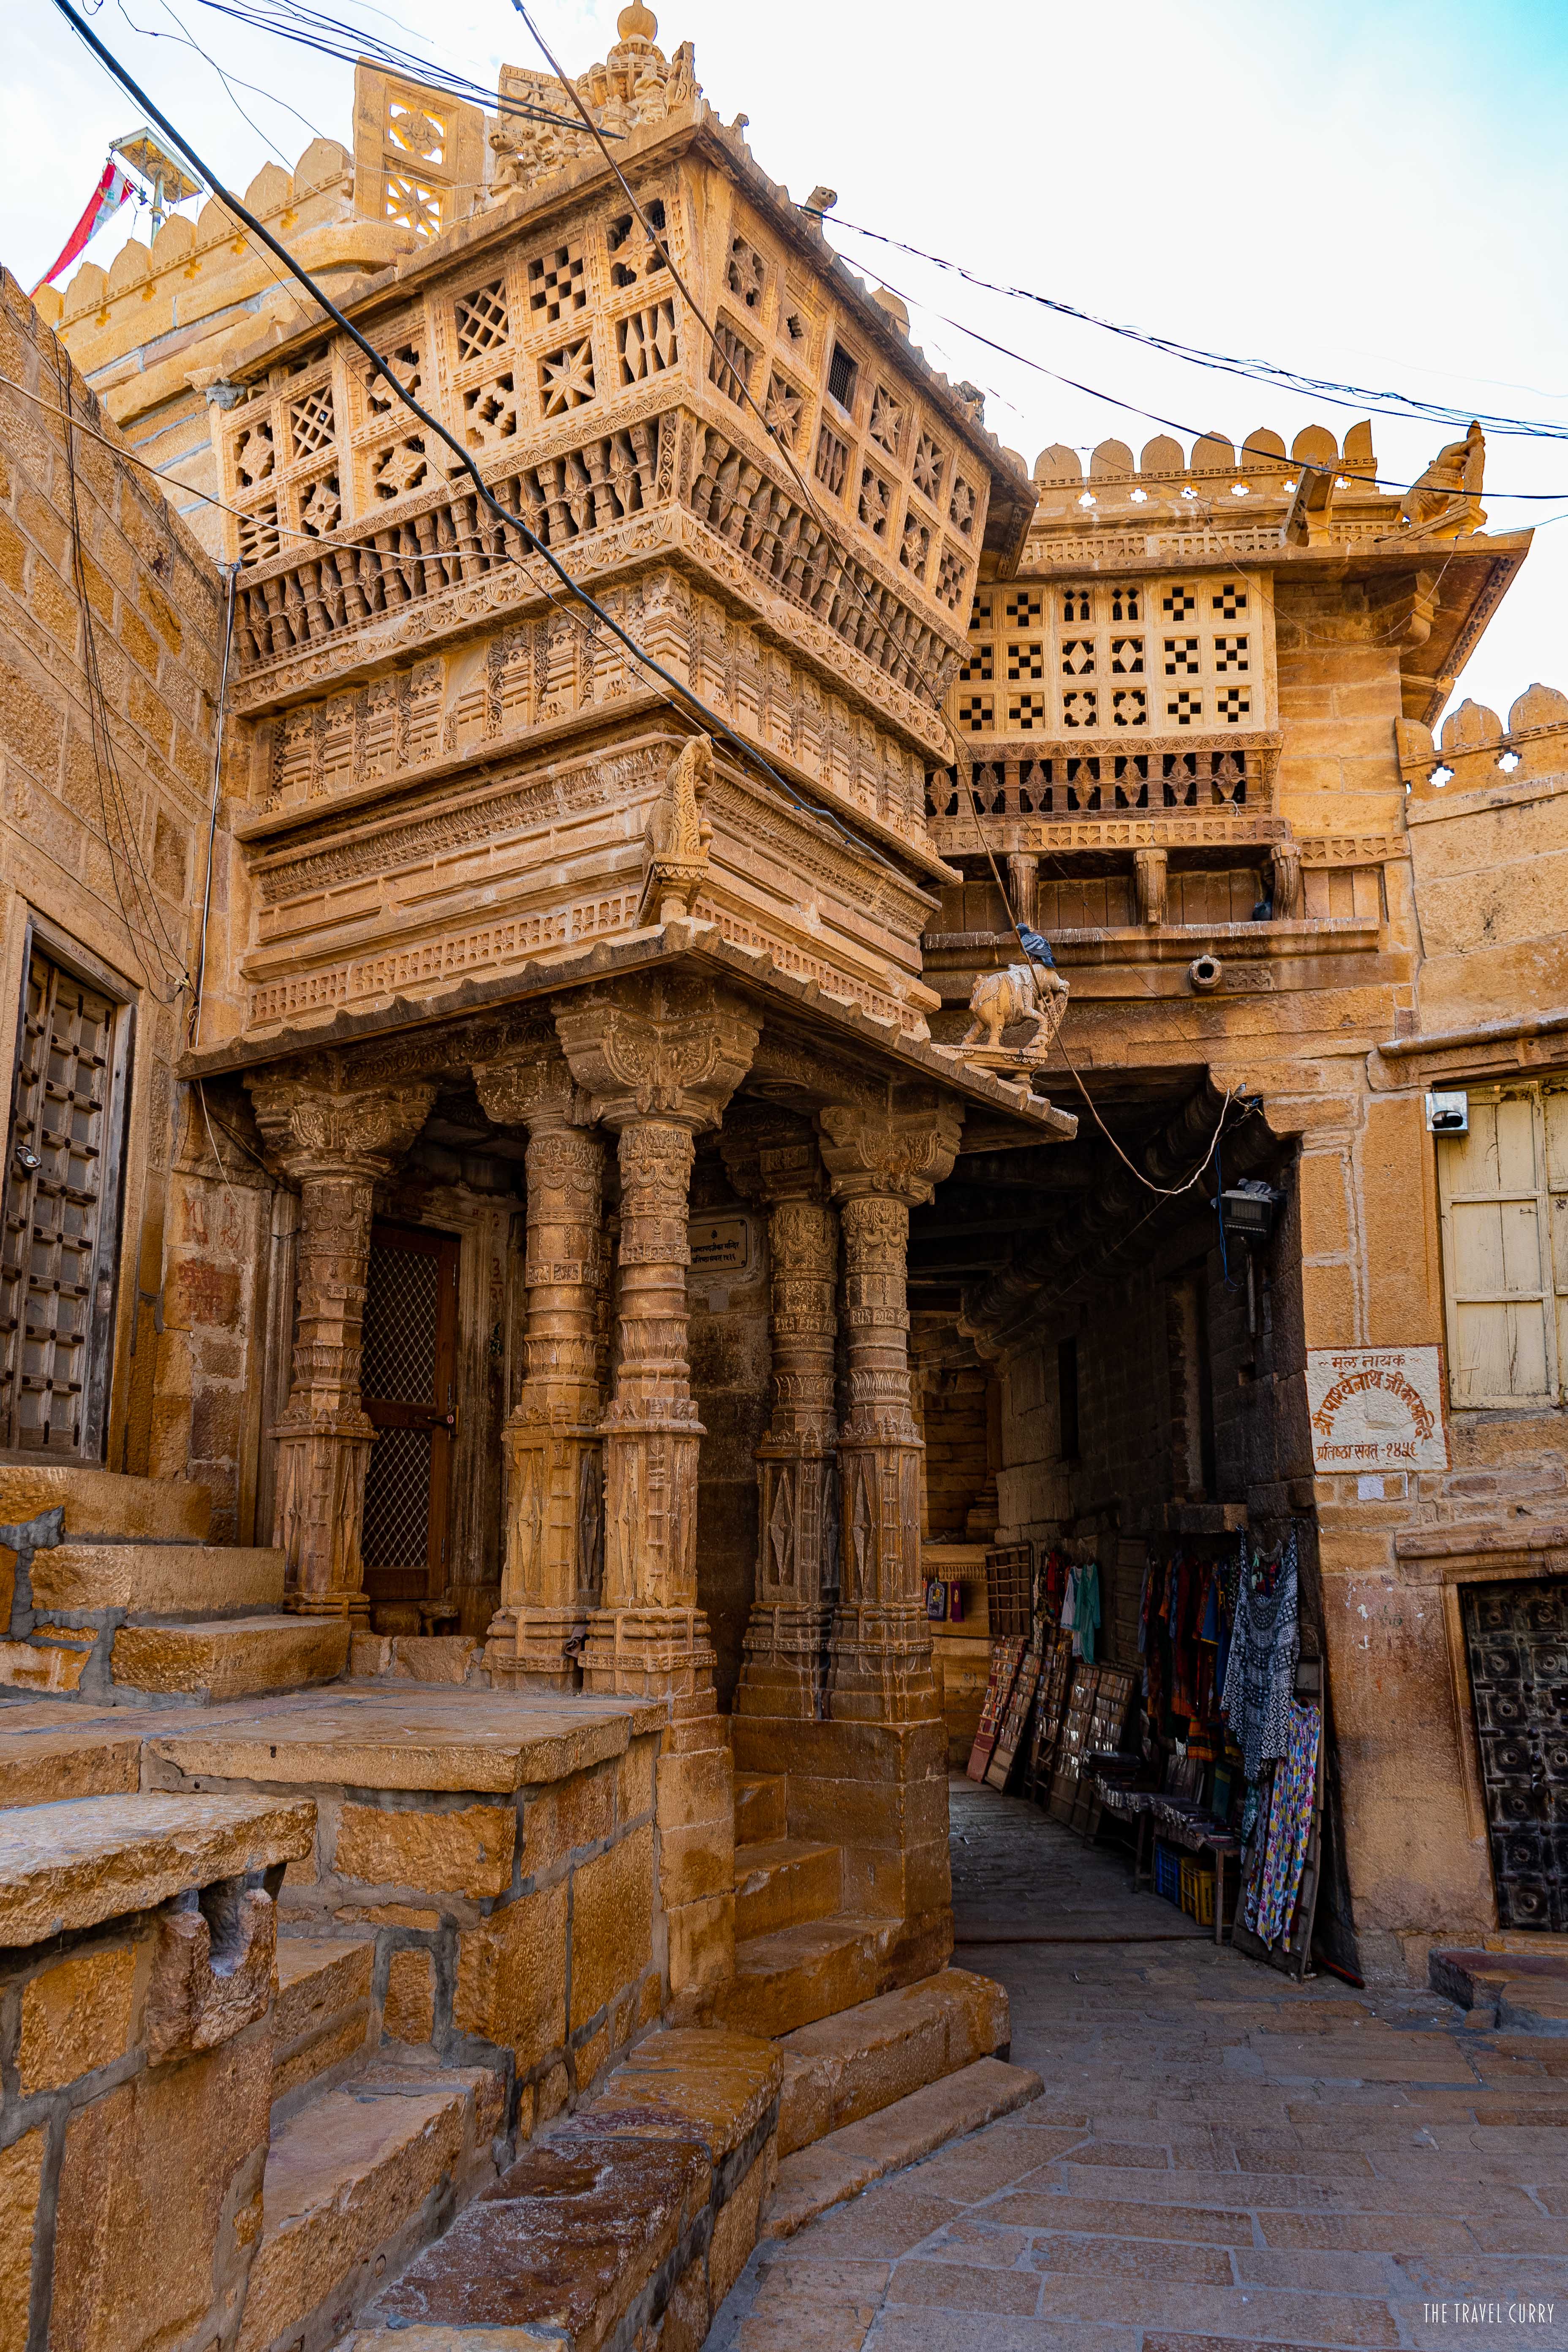 A historic temple inside Jaisalmer Fort